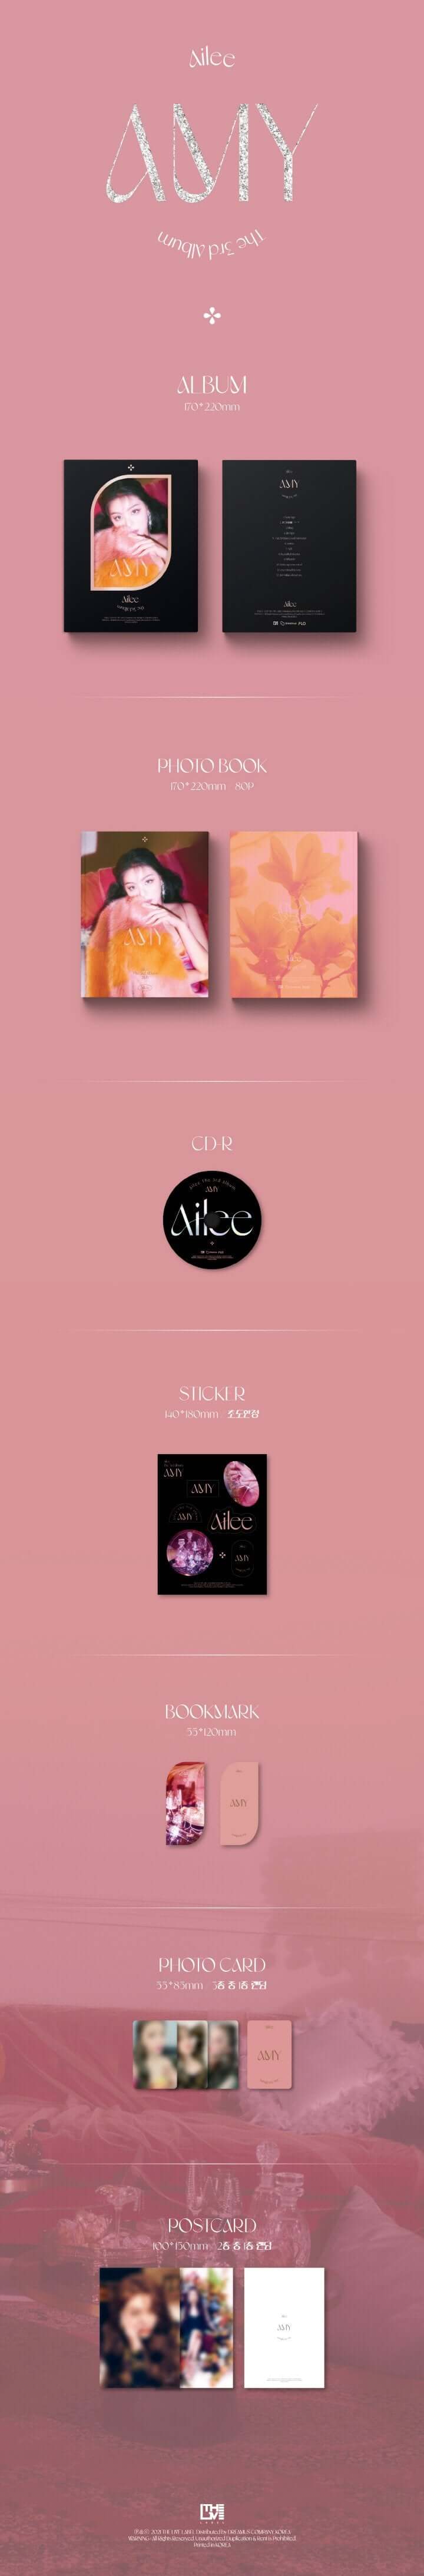 Ailee – AMY (3. Album)